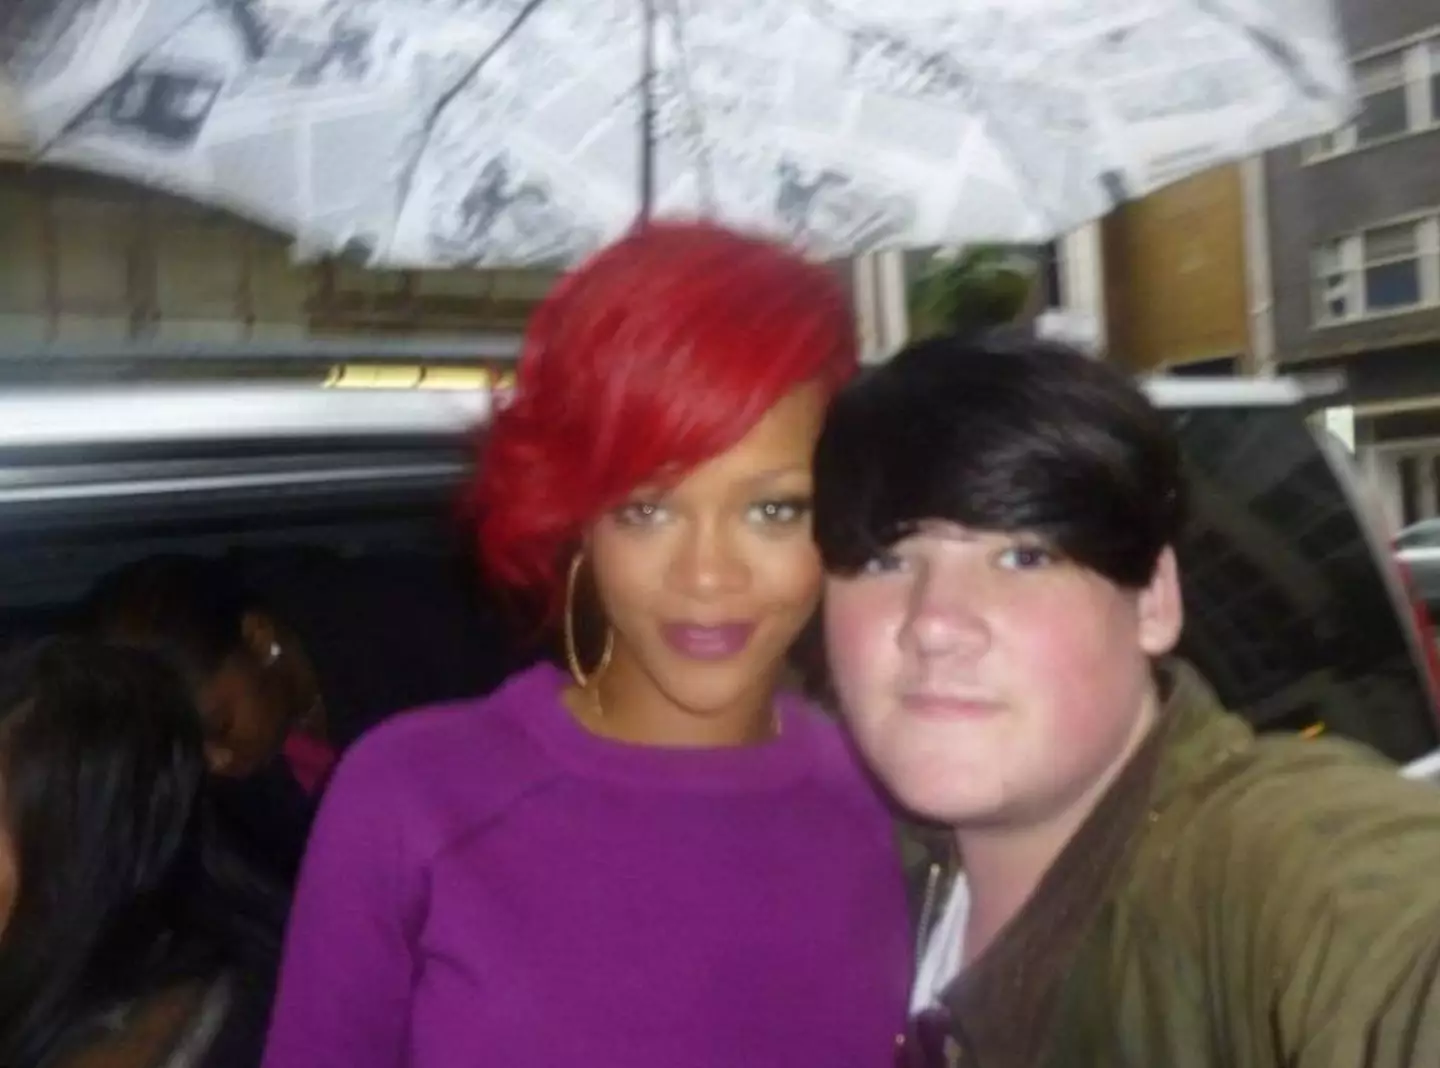 Yes, that's Rihanna under an umbrella.